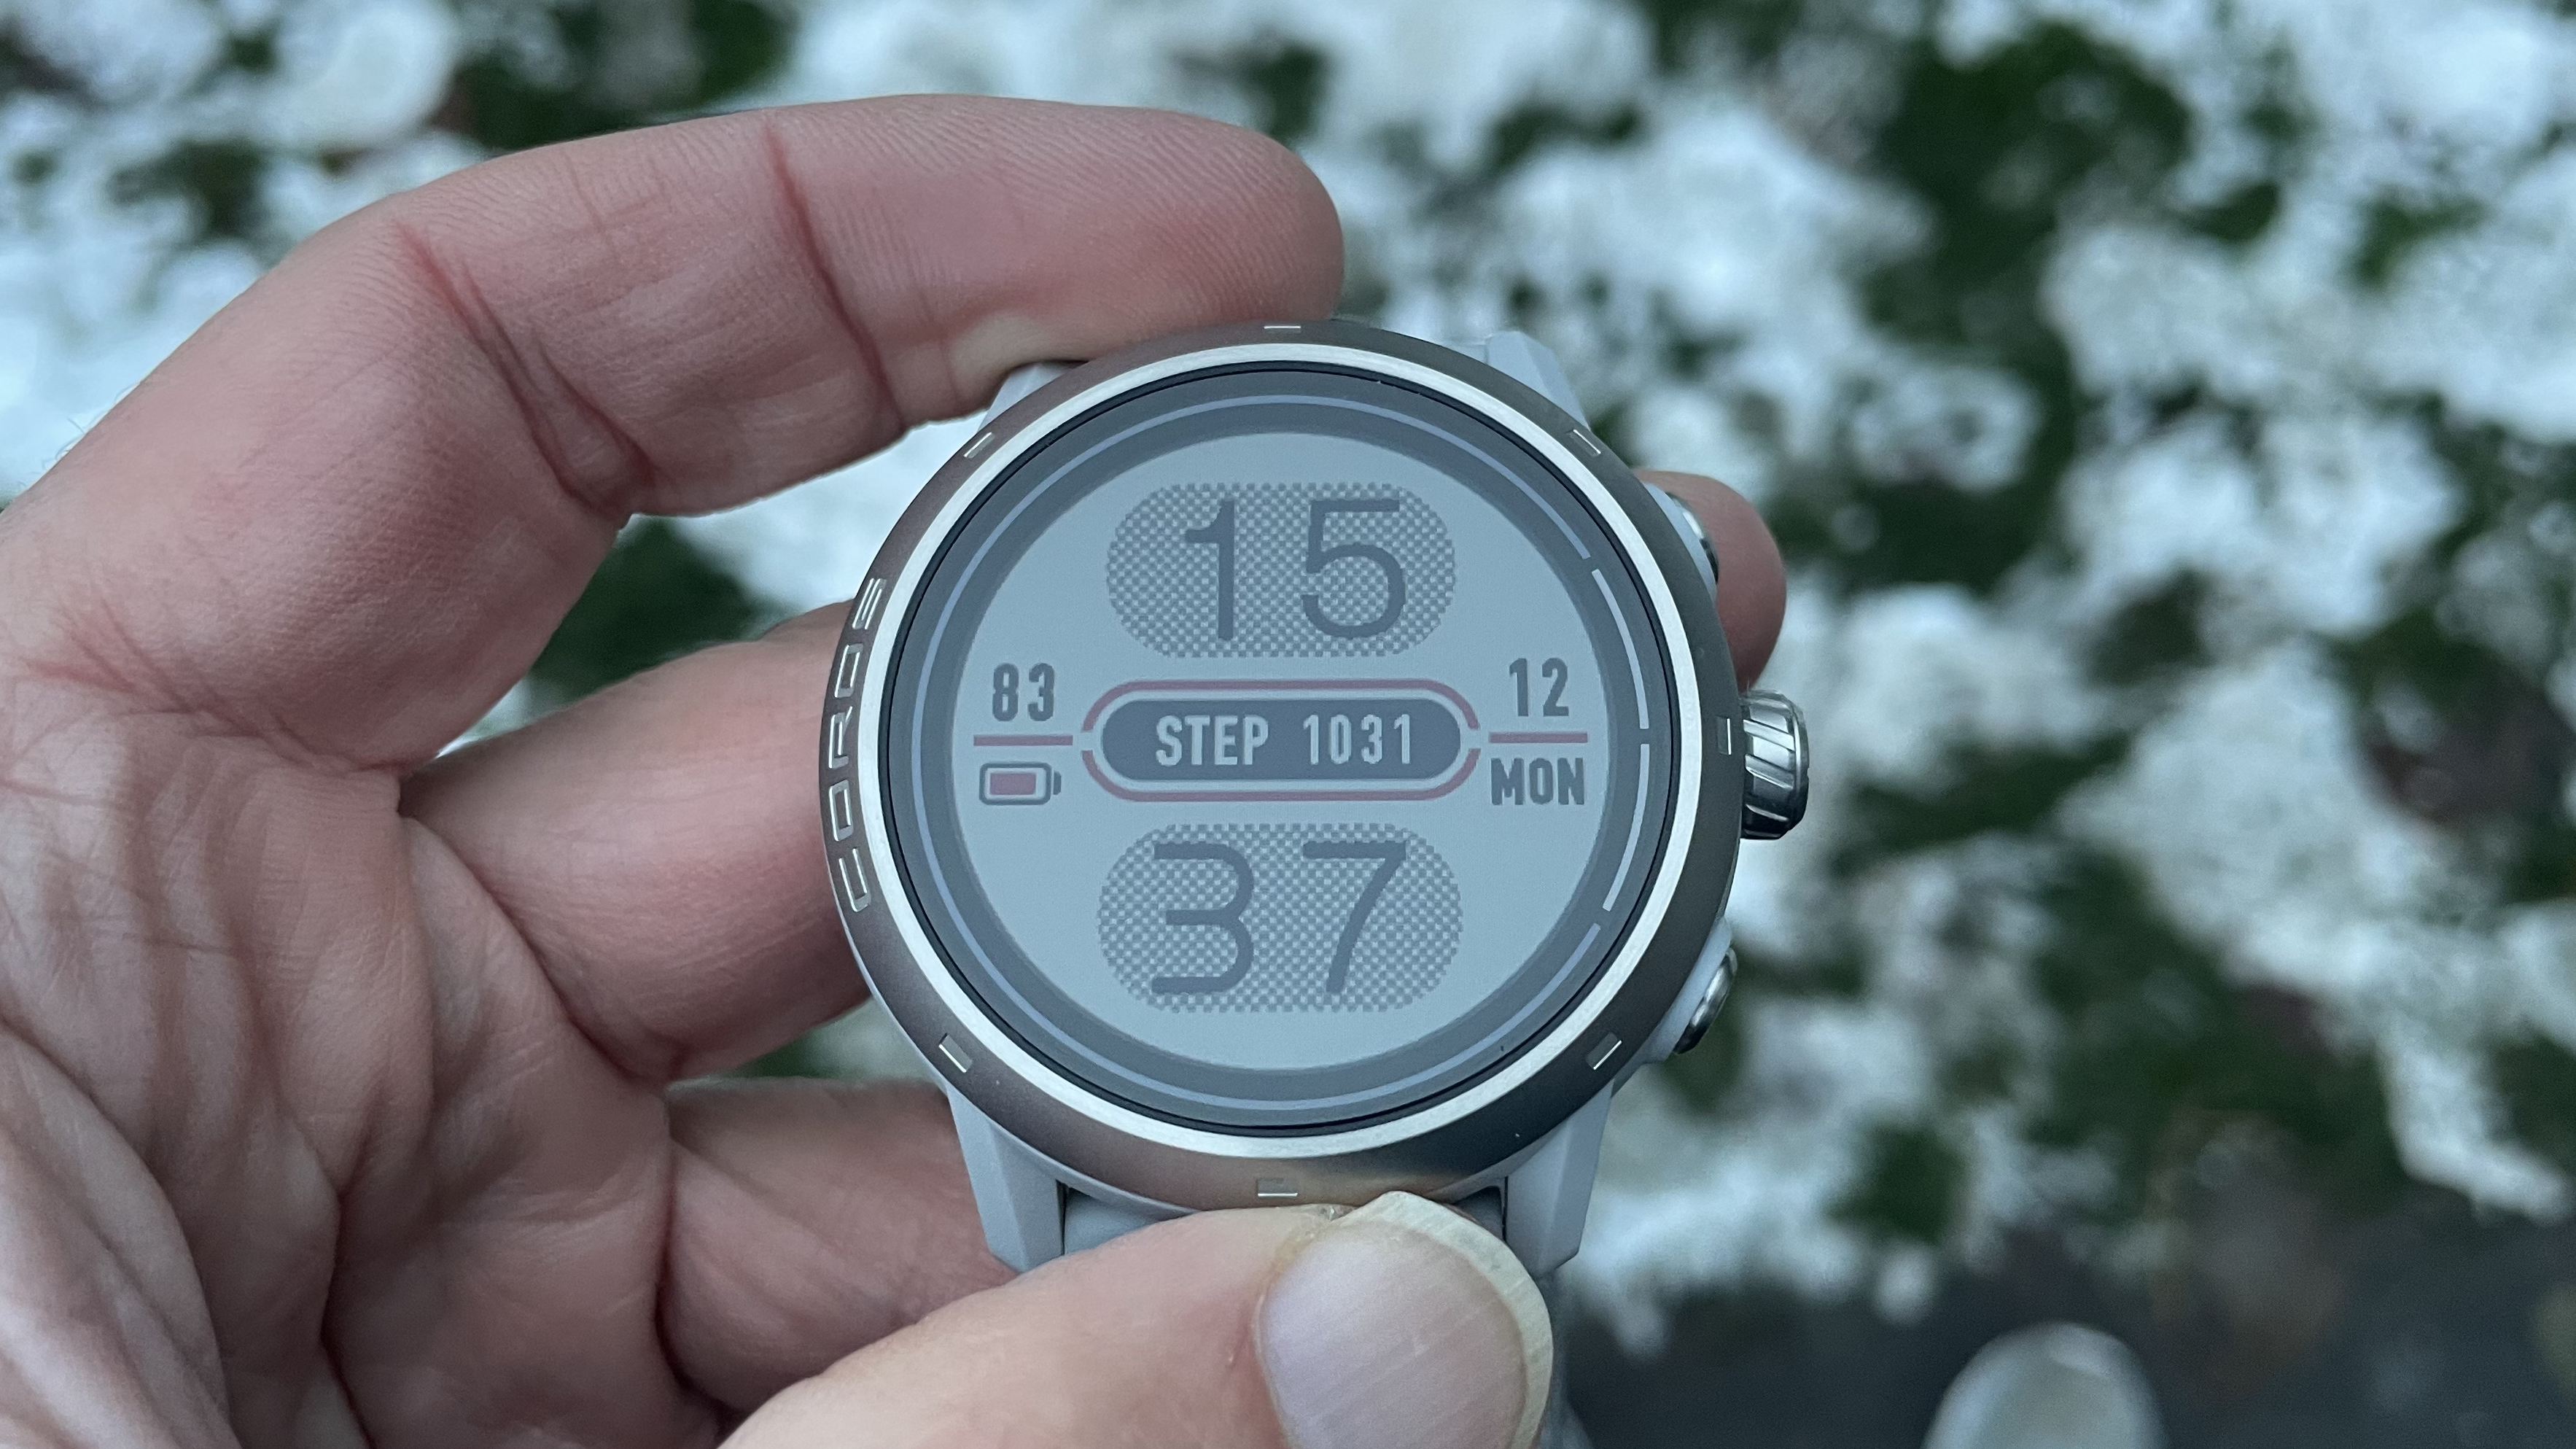 COROS APEX 2 Pro GPS Outdoor Watch, 1.3 Sapphire Screen, 24 Days